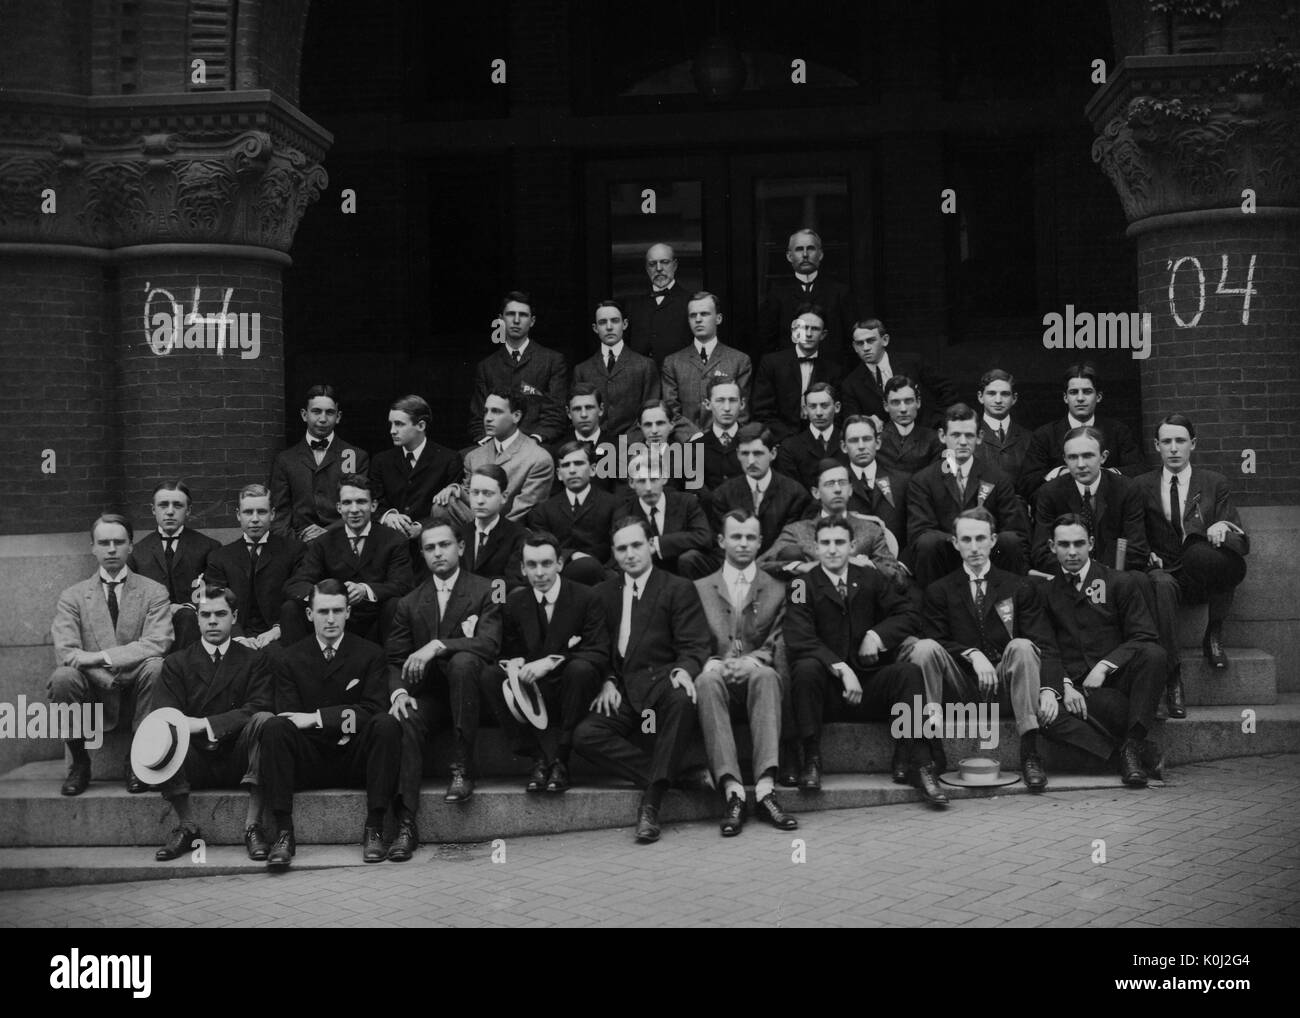 Immagine della Johns Hopkins University classe di 1904remsen, ira | griffin, Edward herrick, 1904. Foto Stock